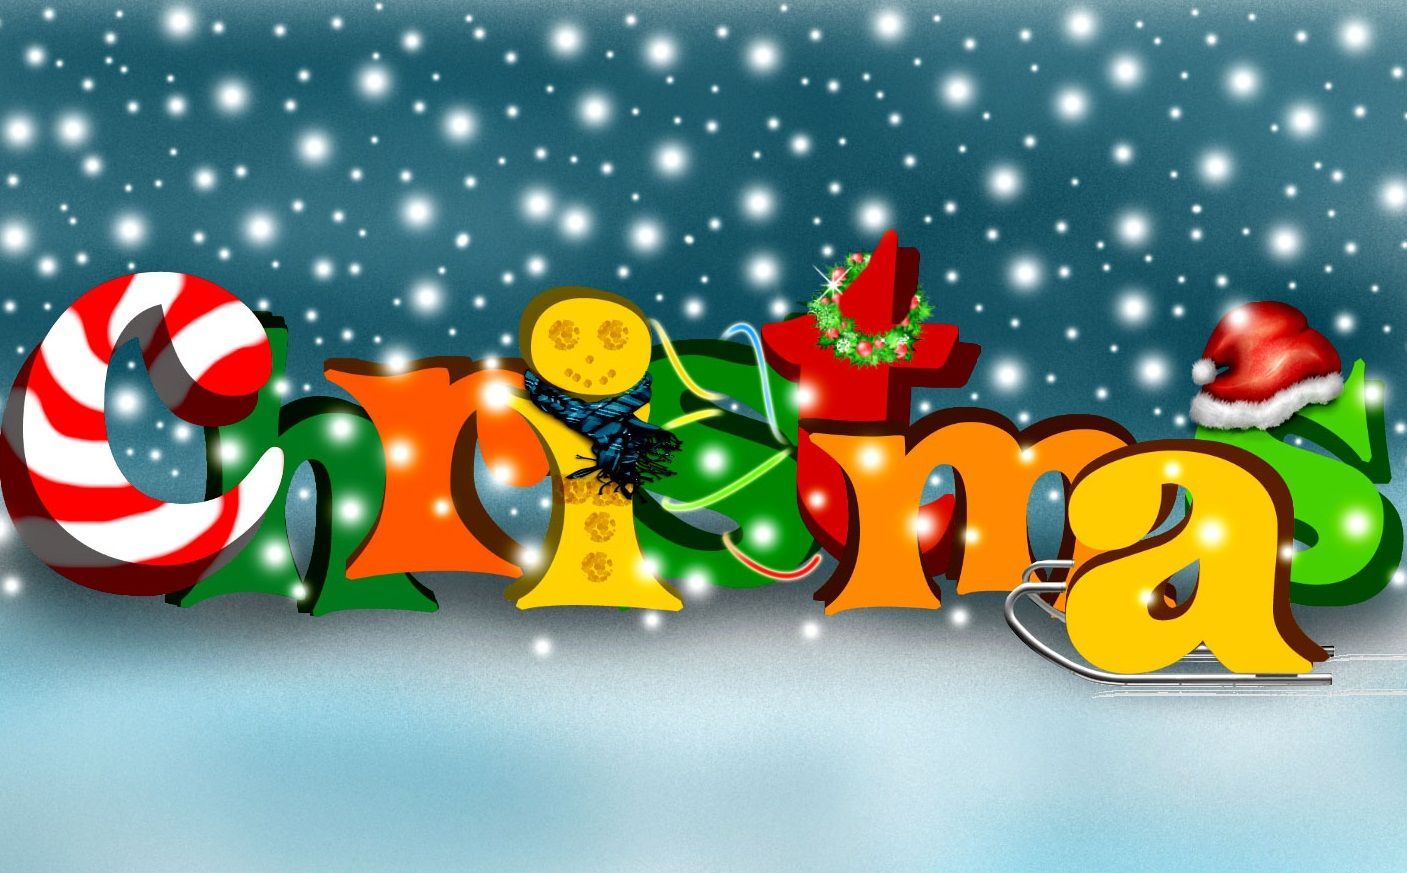 Merry Christmas joke HD wallpaper 2014. Christmas facebook cover, Christmas wallpaper hd, Merry christmas wallpaper